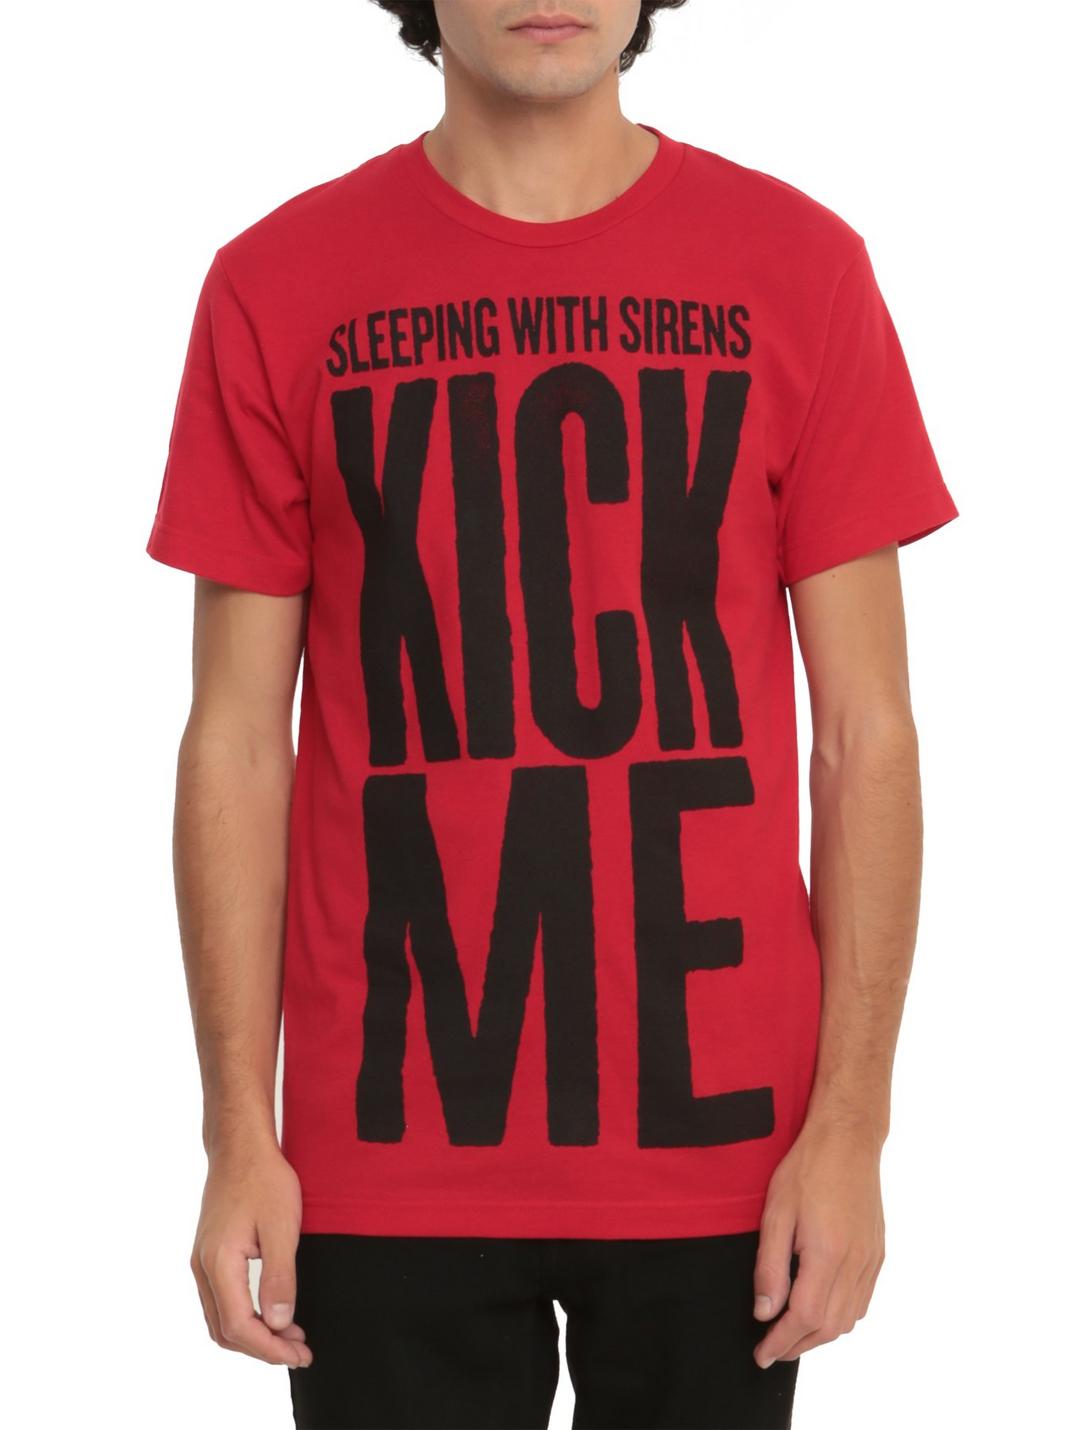 Sleeping With Sirens Kick Me T-Shirt, , hi-res